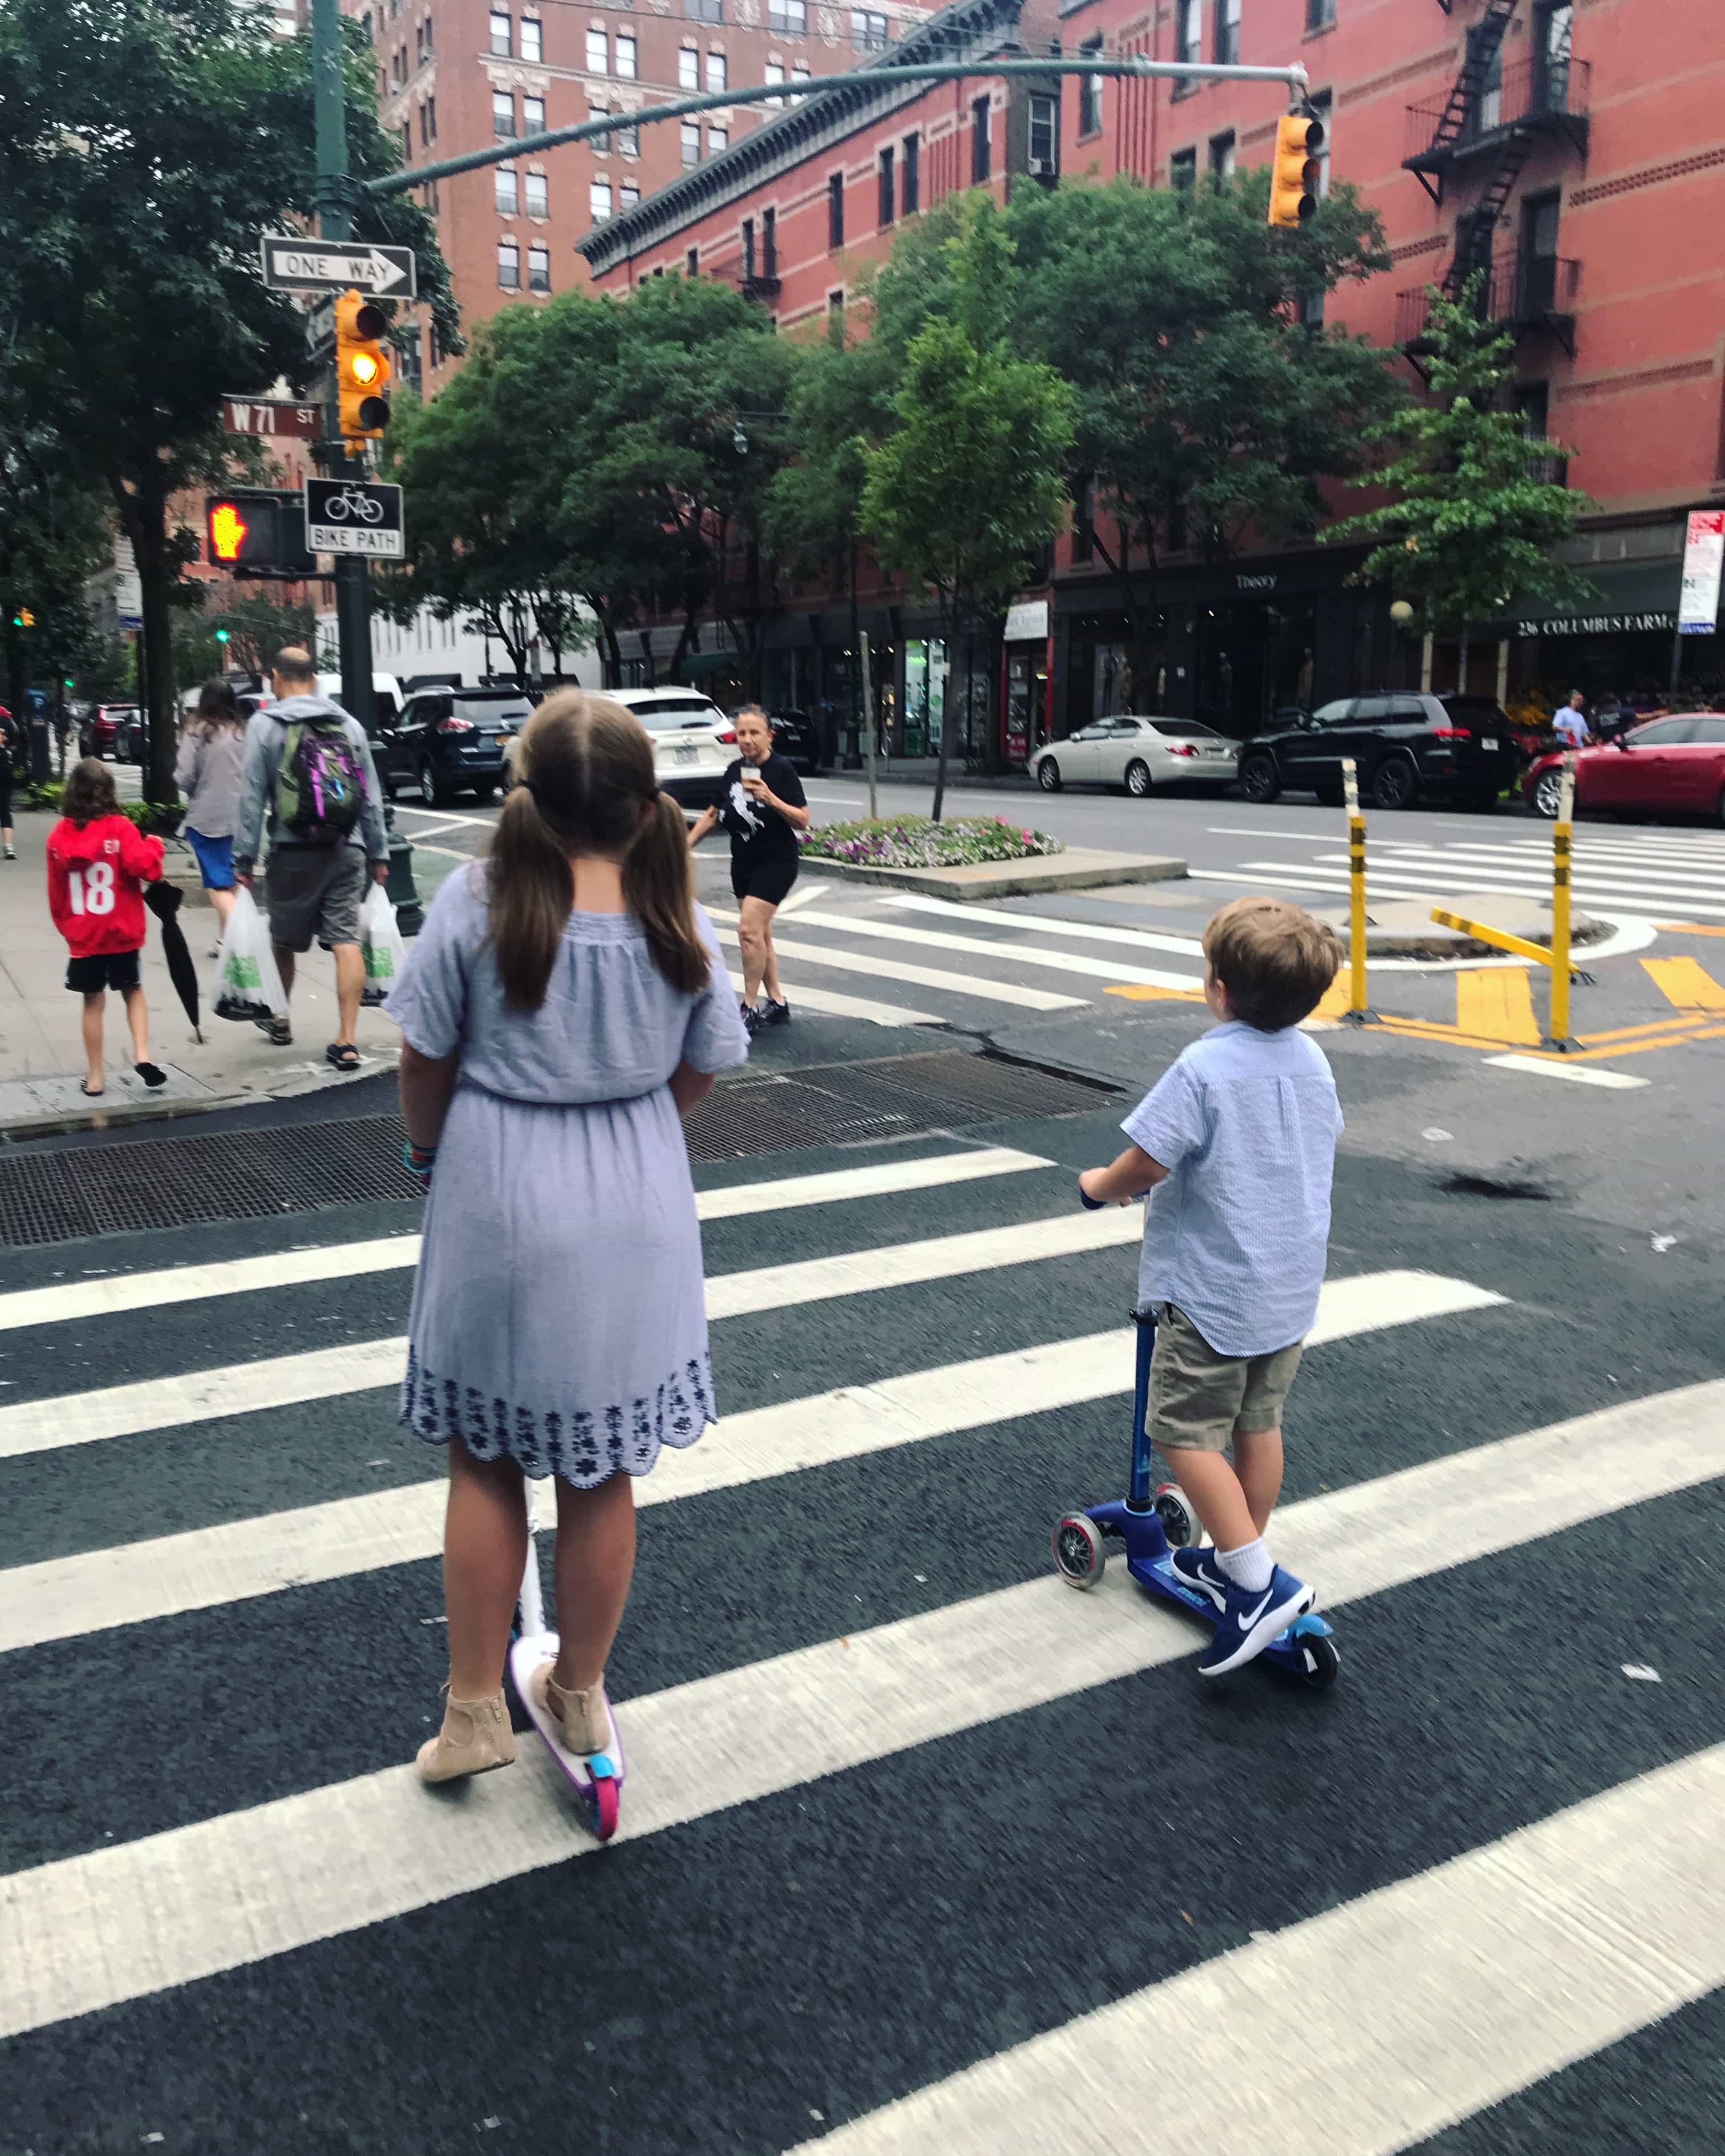 Kids crossing the street